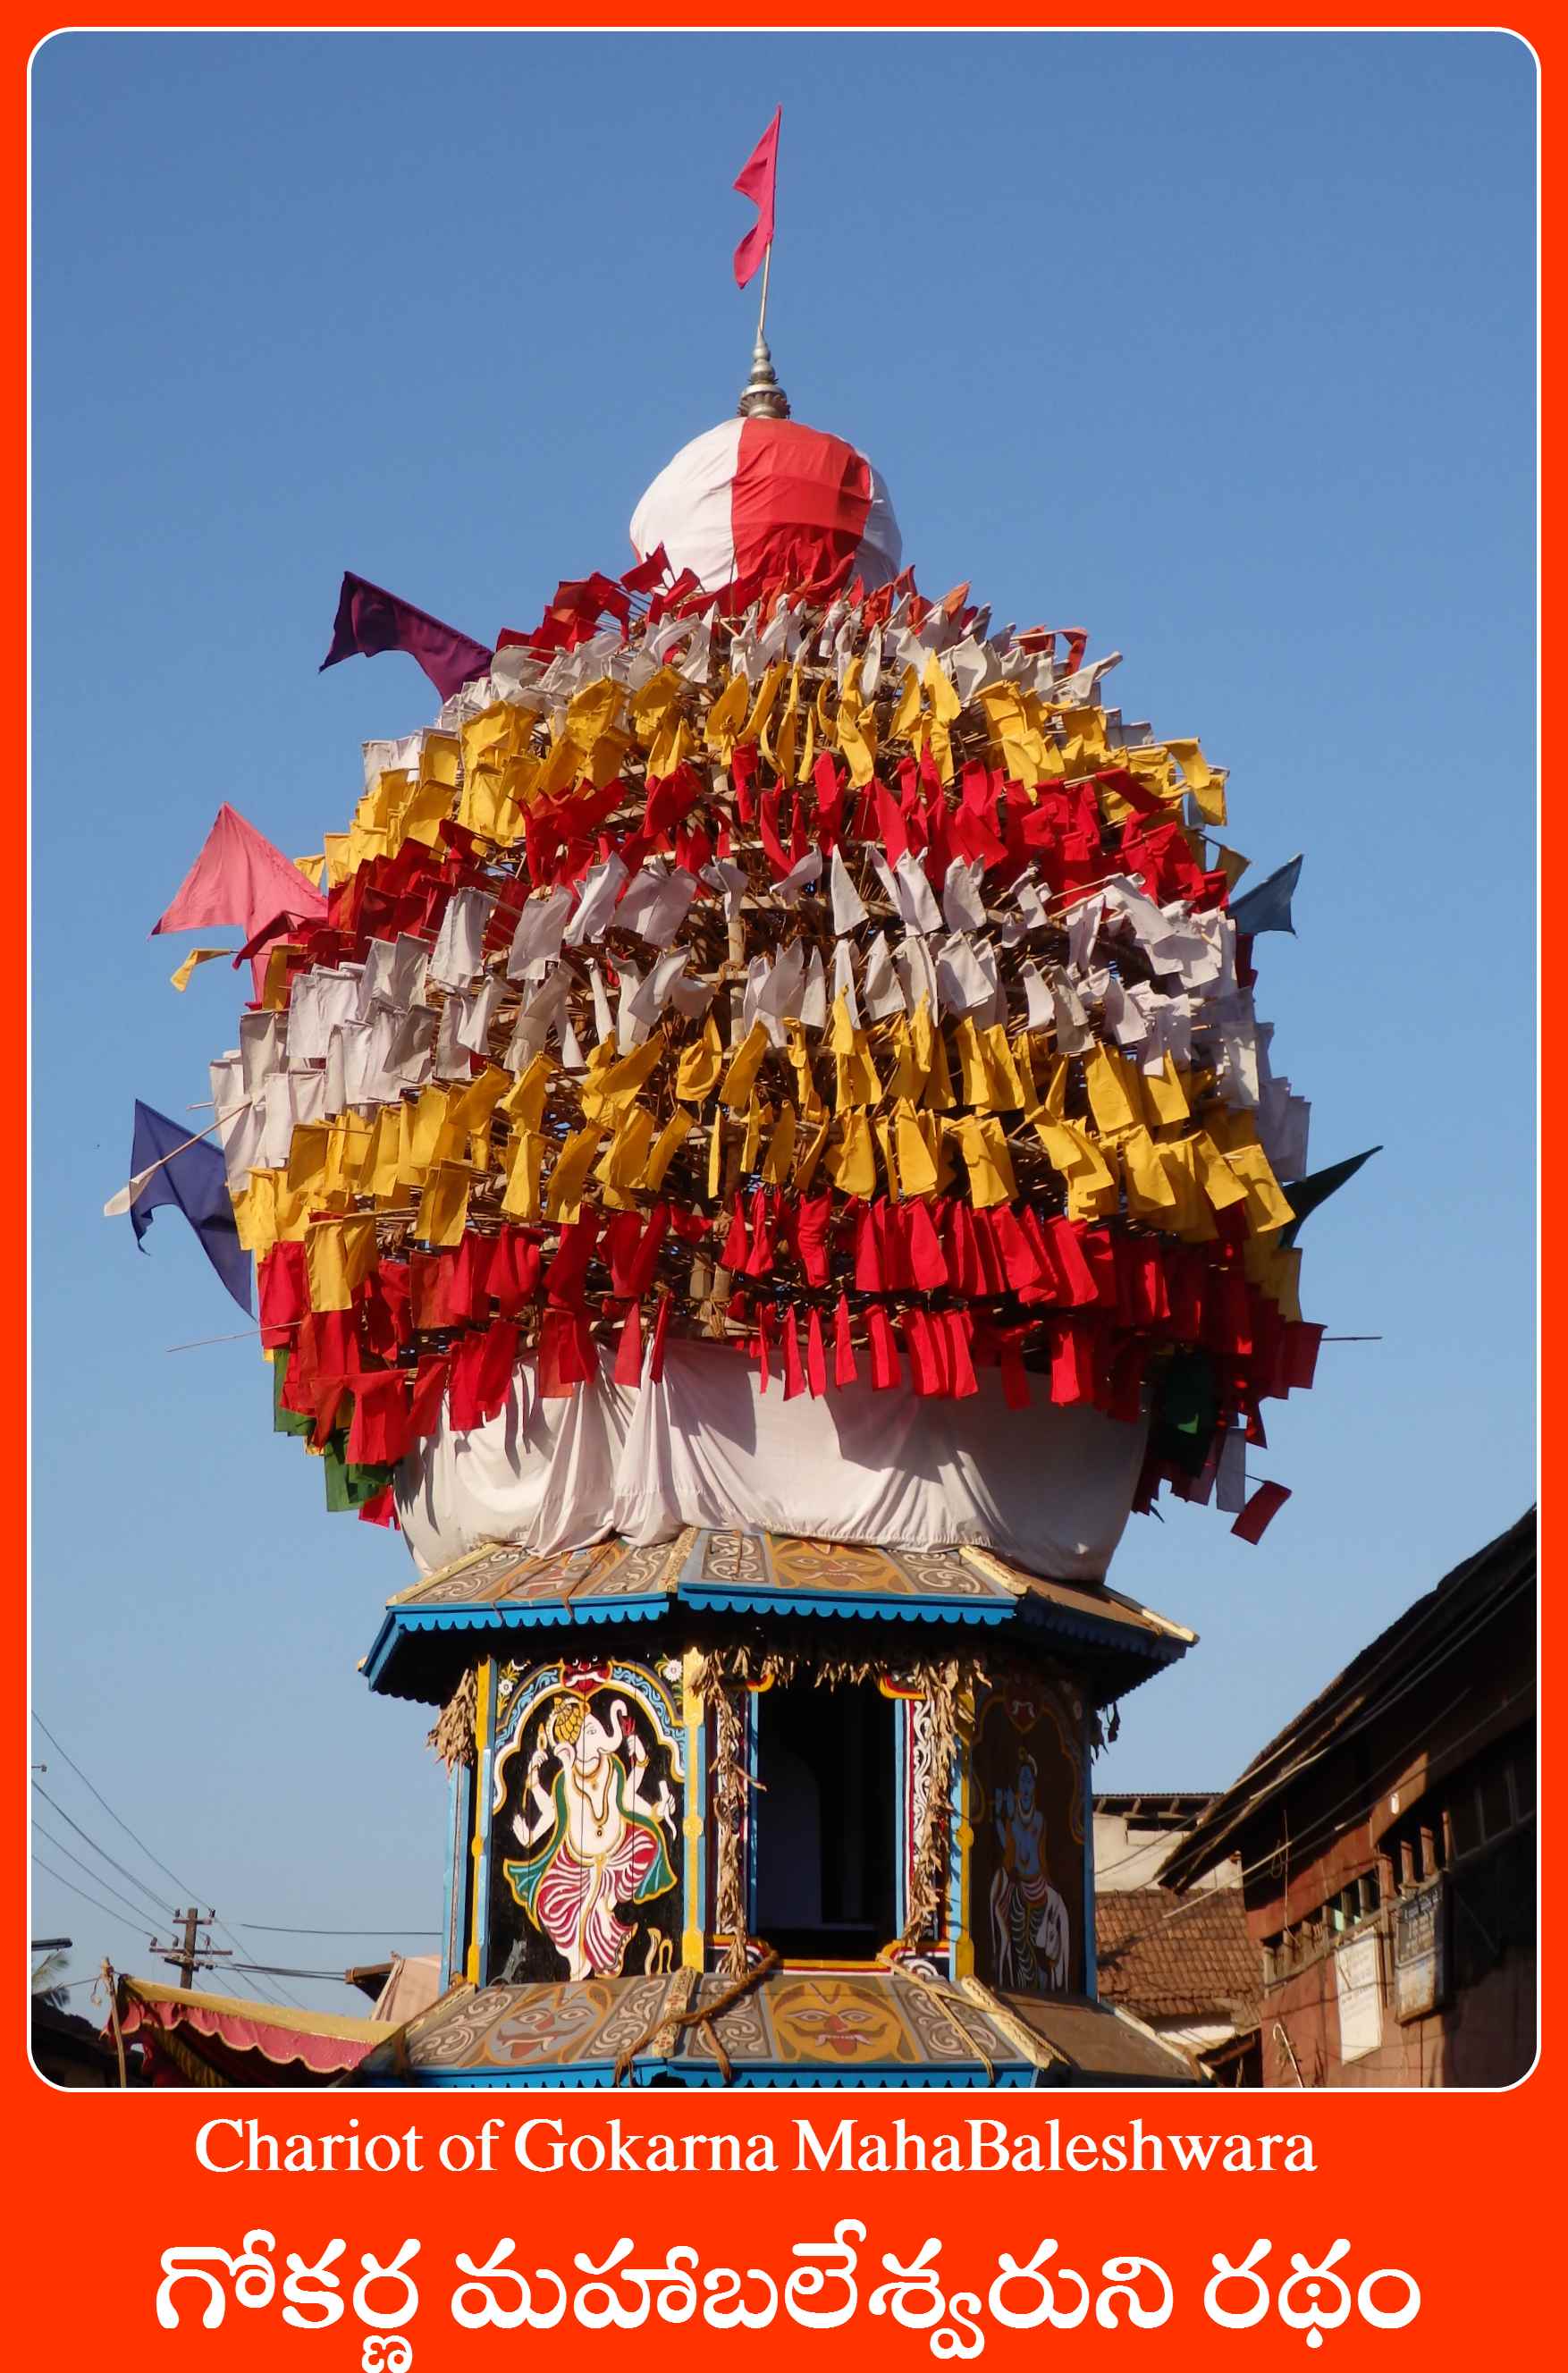 Chariot of Gokarna MahaBaleshwara